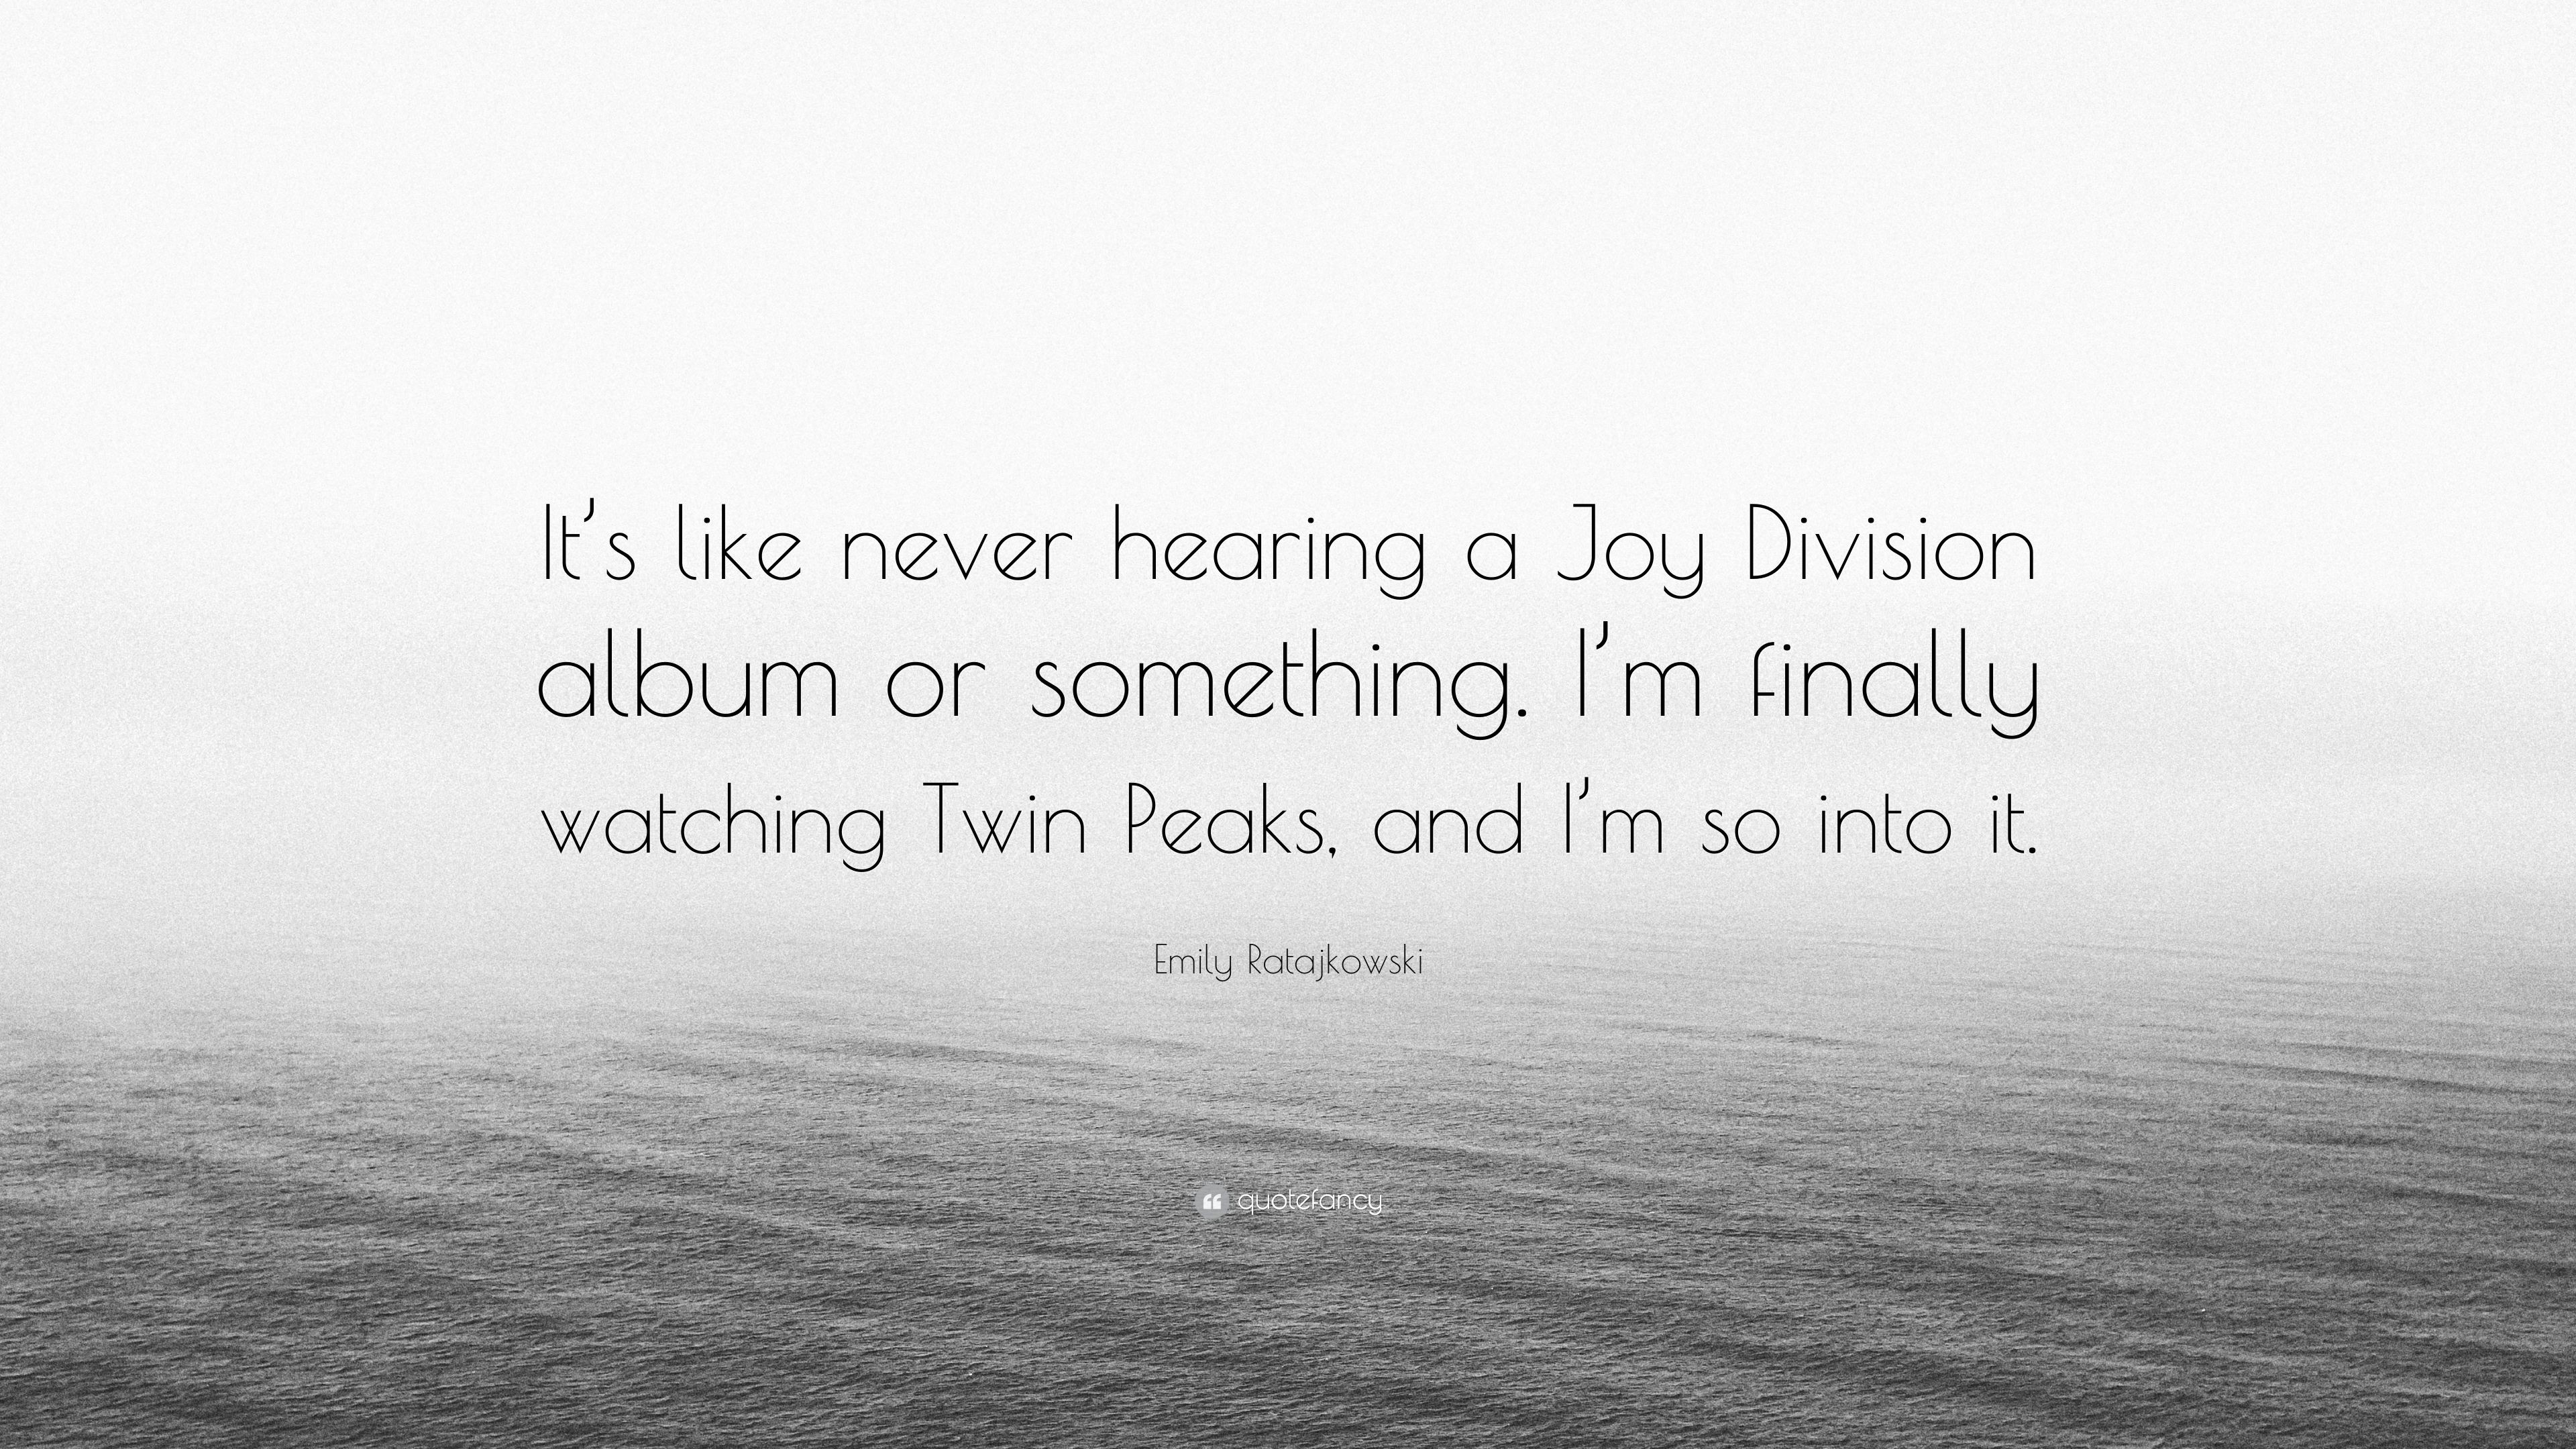 3840x2160 Emily Ratajkowski Quote: “It's like never hearing a Joy Division album or  something.